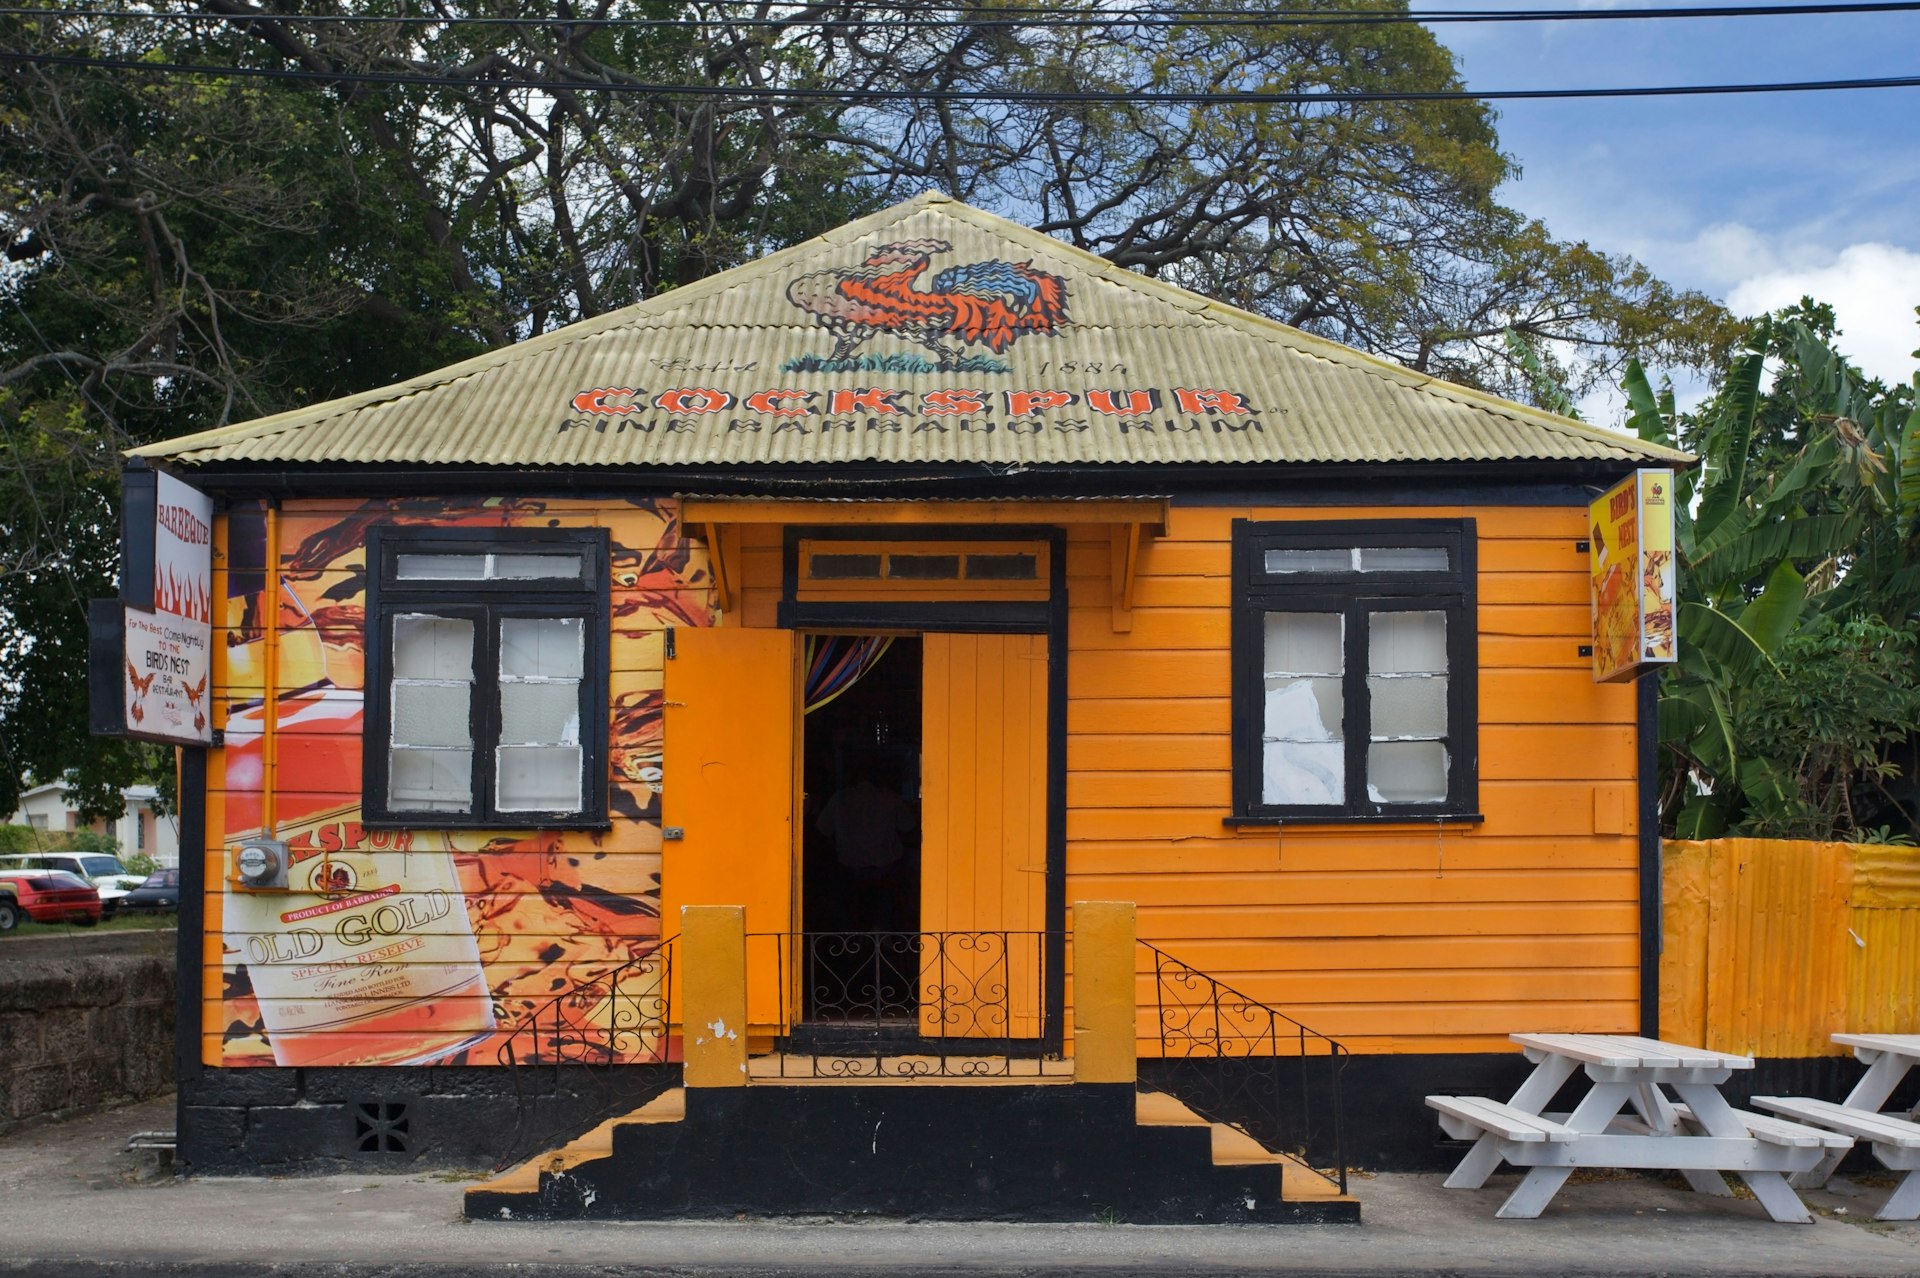 BAR3AY Rum Shop in Bridgetown, St Michael Parish, Barbados – a bright orange small wooden building